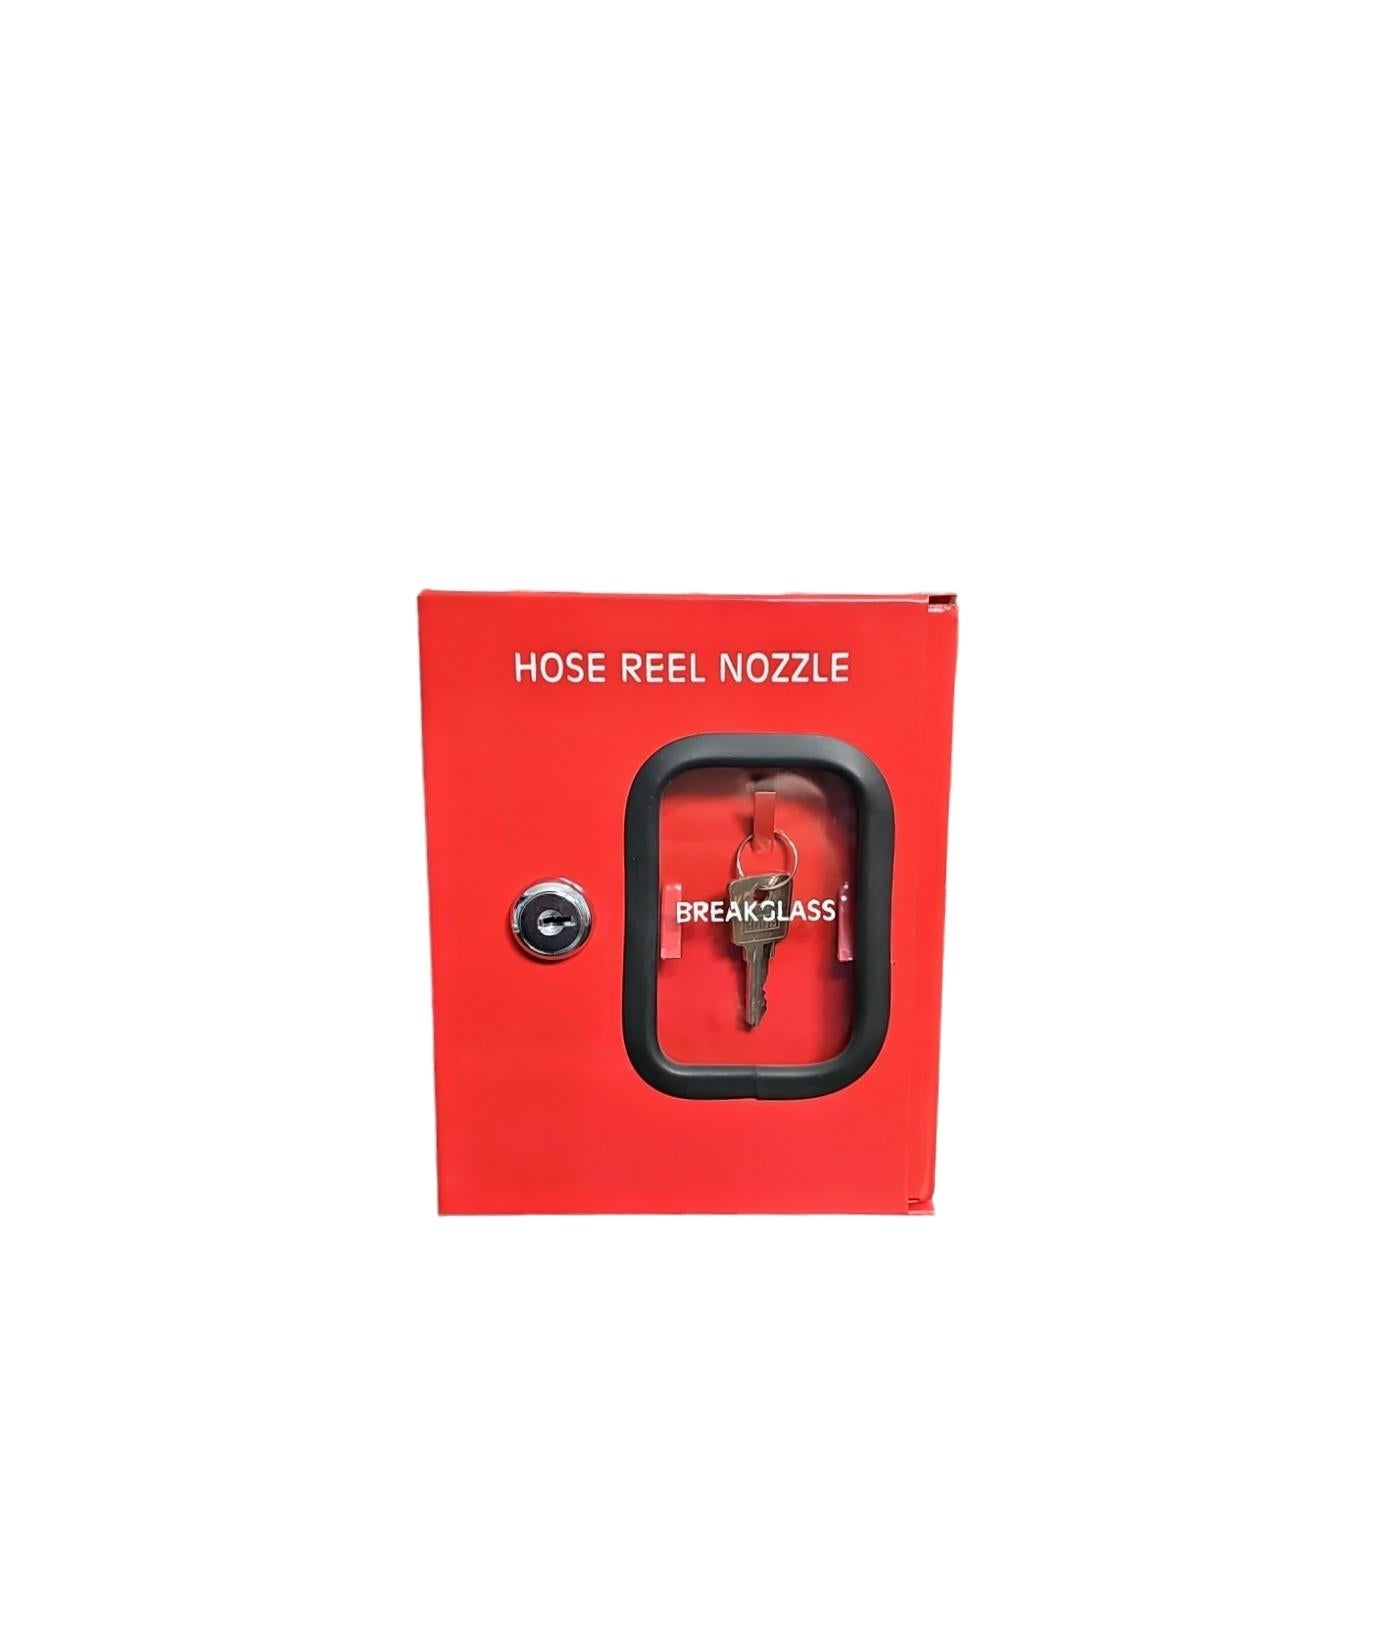 Metal powder-coated Hose reel nozzle lock box - Premium  from Wolf - Shop now at Firebox Australia